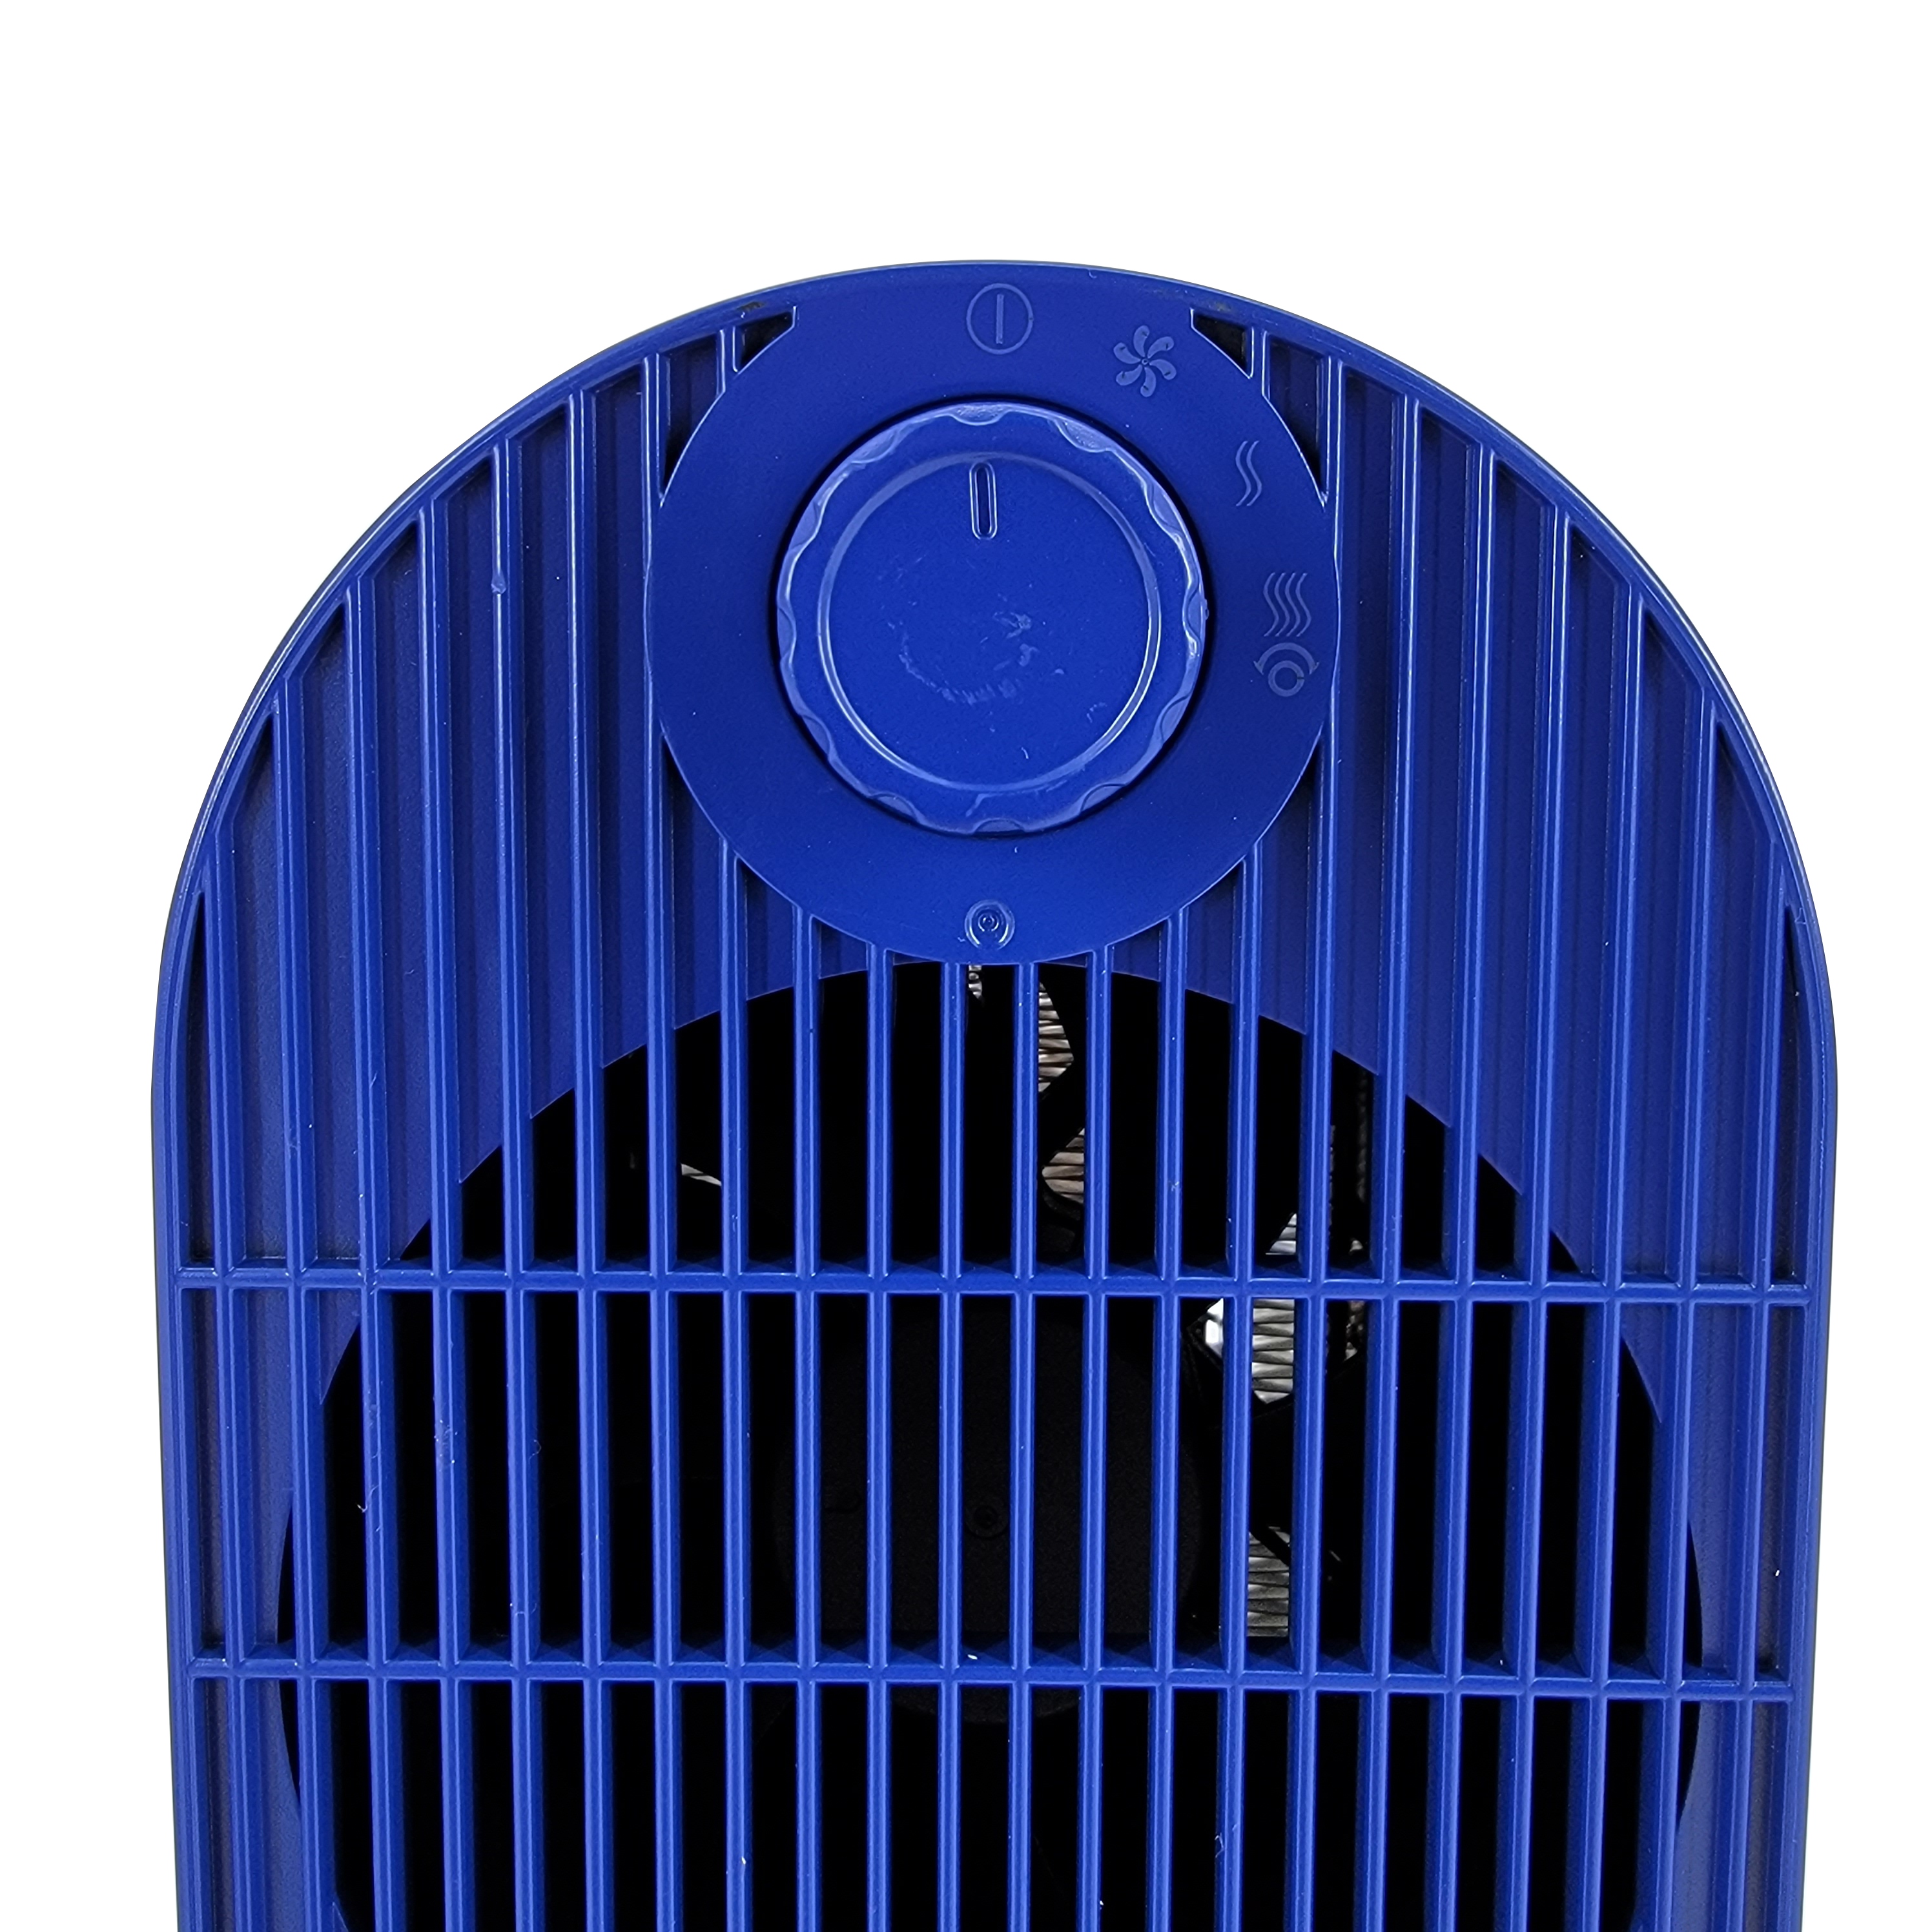 Living-Glow 600W Ceramic Tabletop Fan/Heater Combo, Assorted Colors, FOB KS